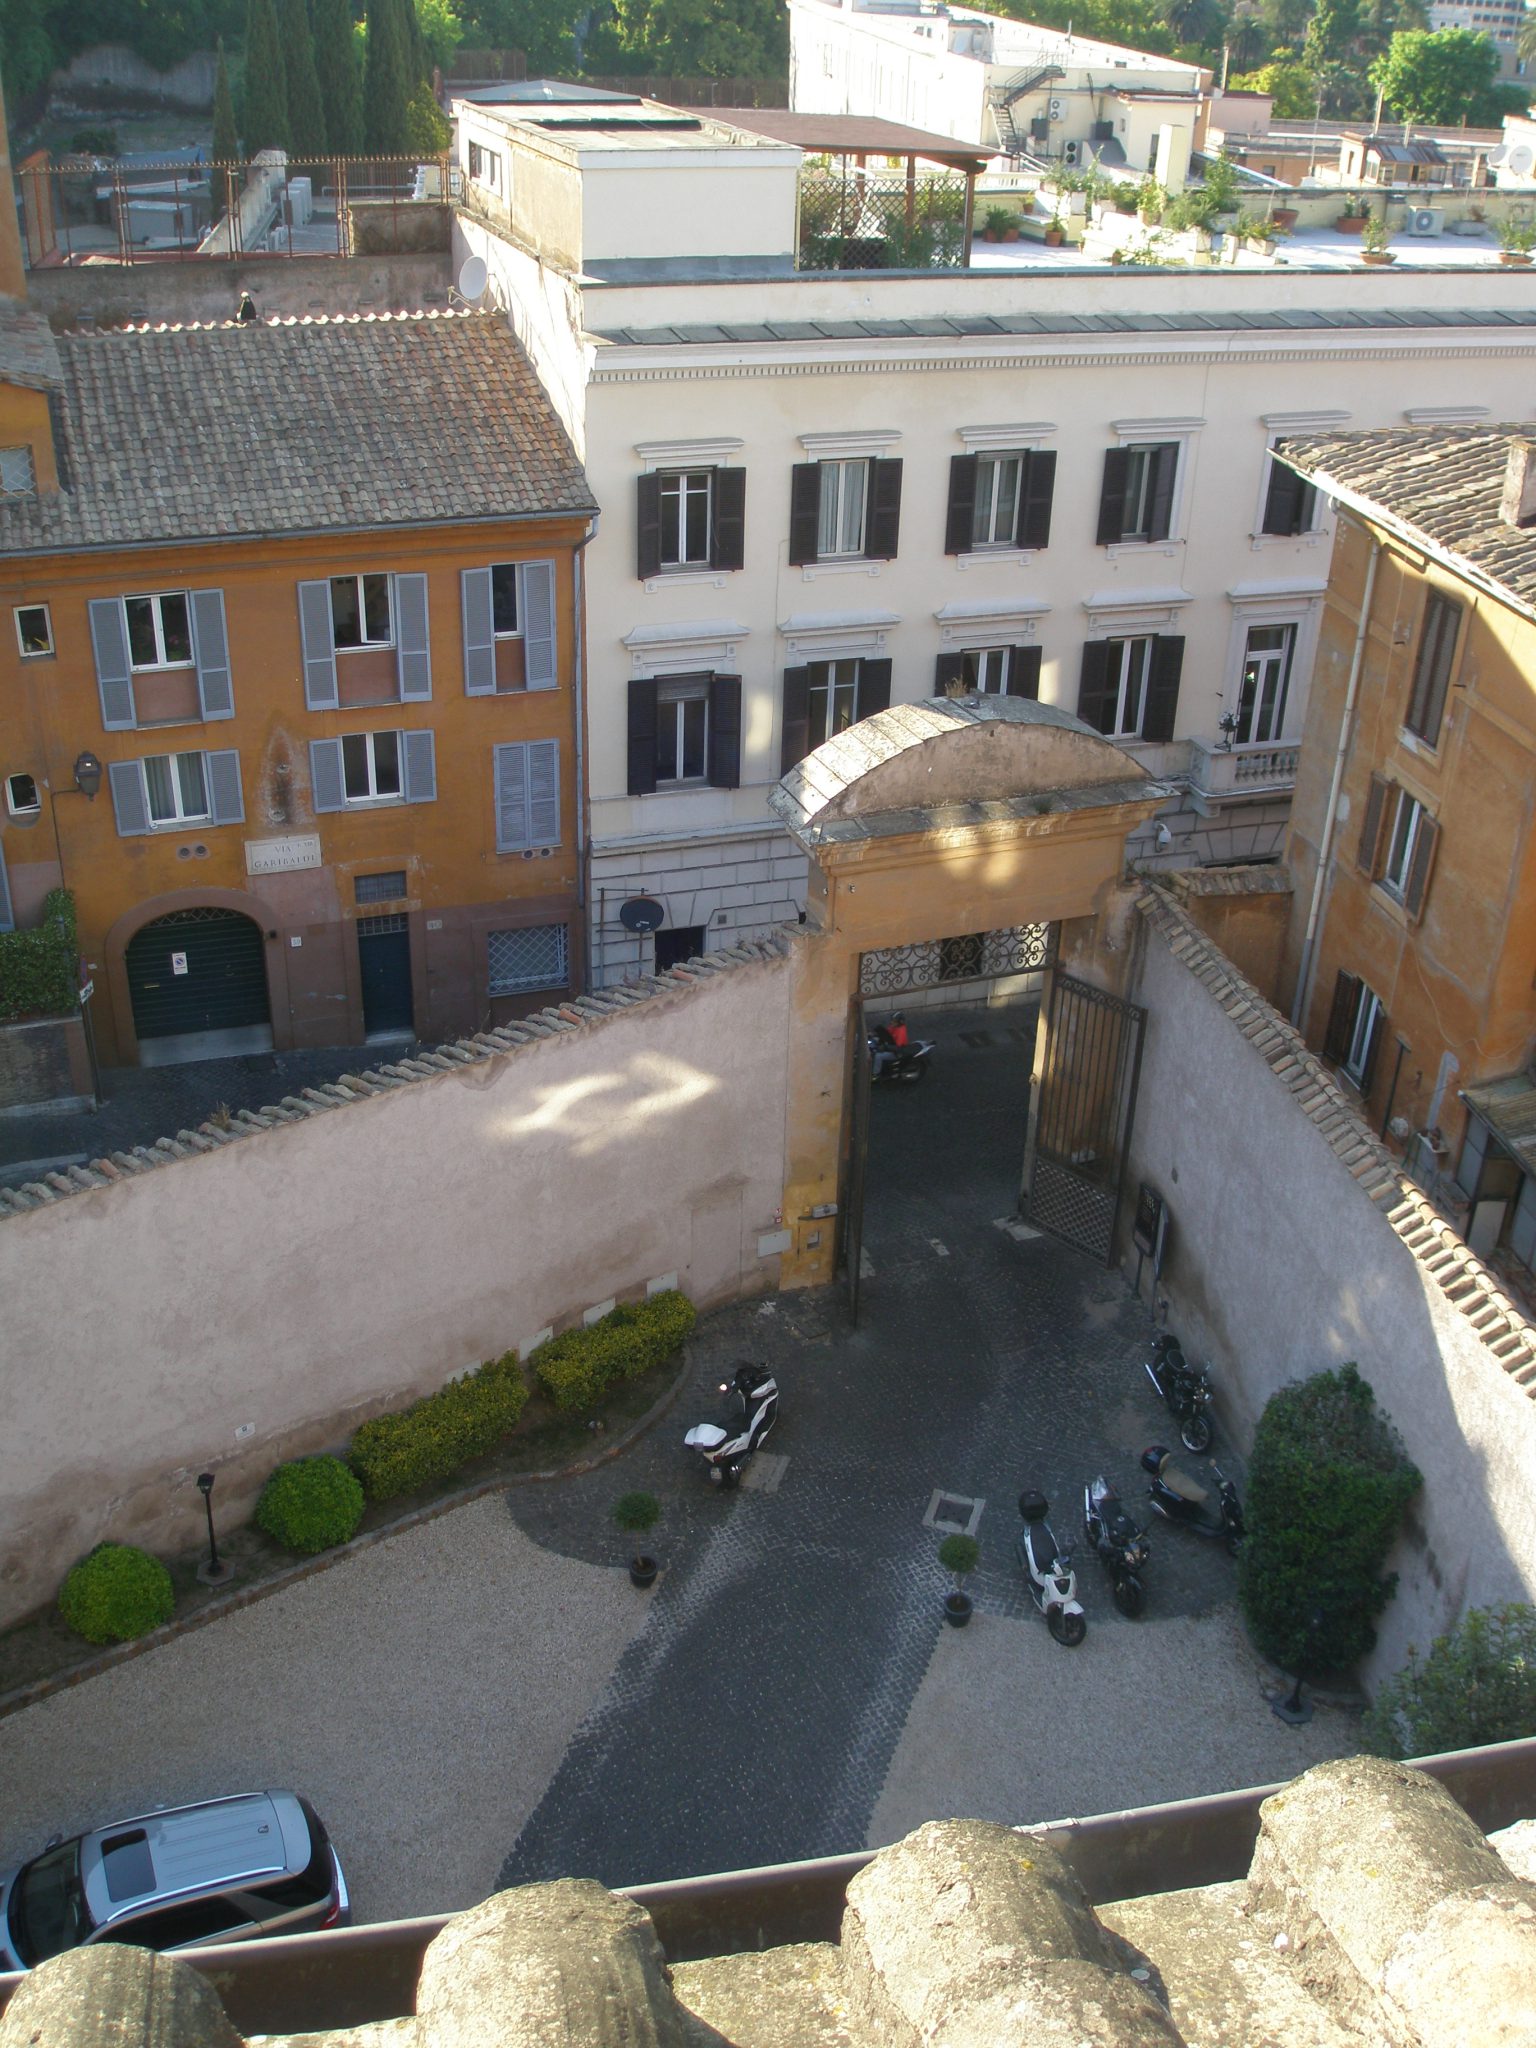 A vertiginous look at the front entry courtyard.